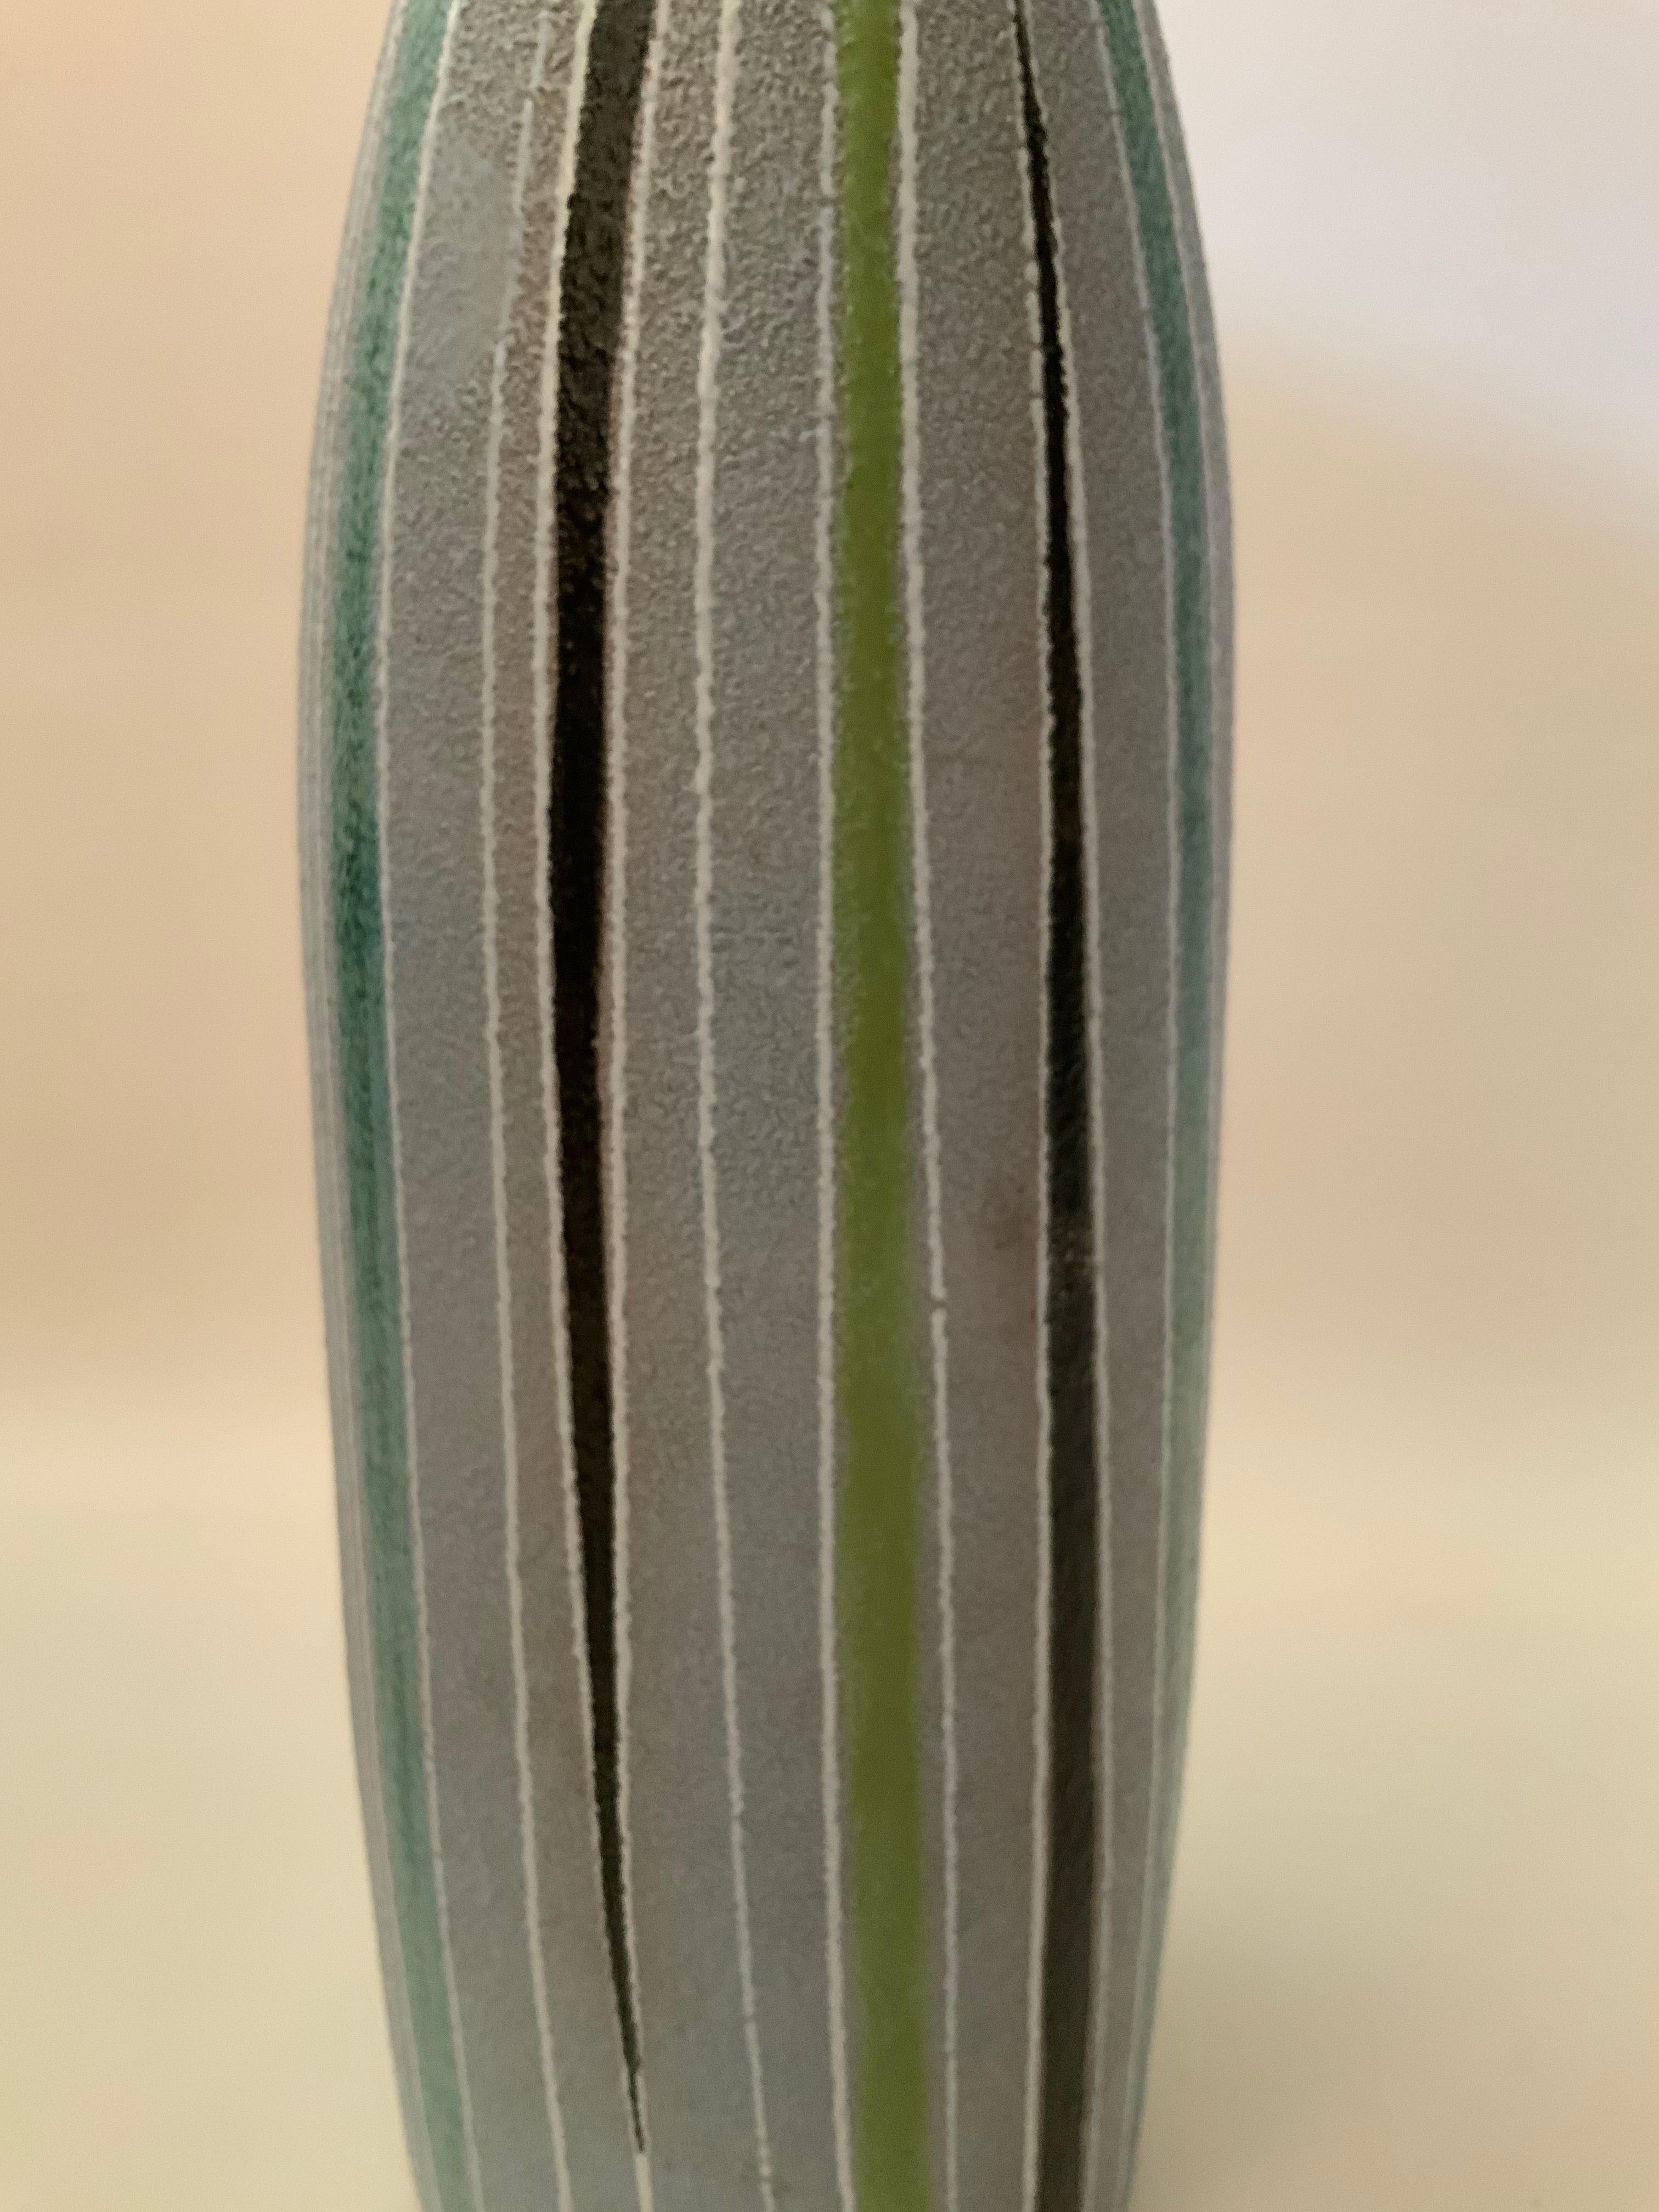 Italian Tall Striped Fratelli Fanciullacci for Raymor Art Pottery Vase